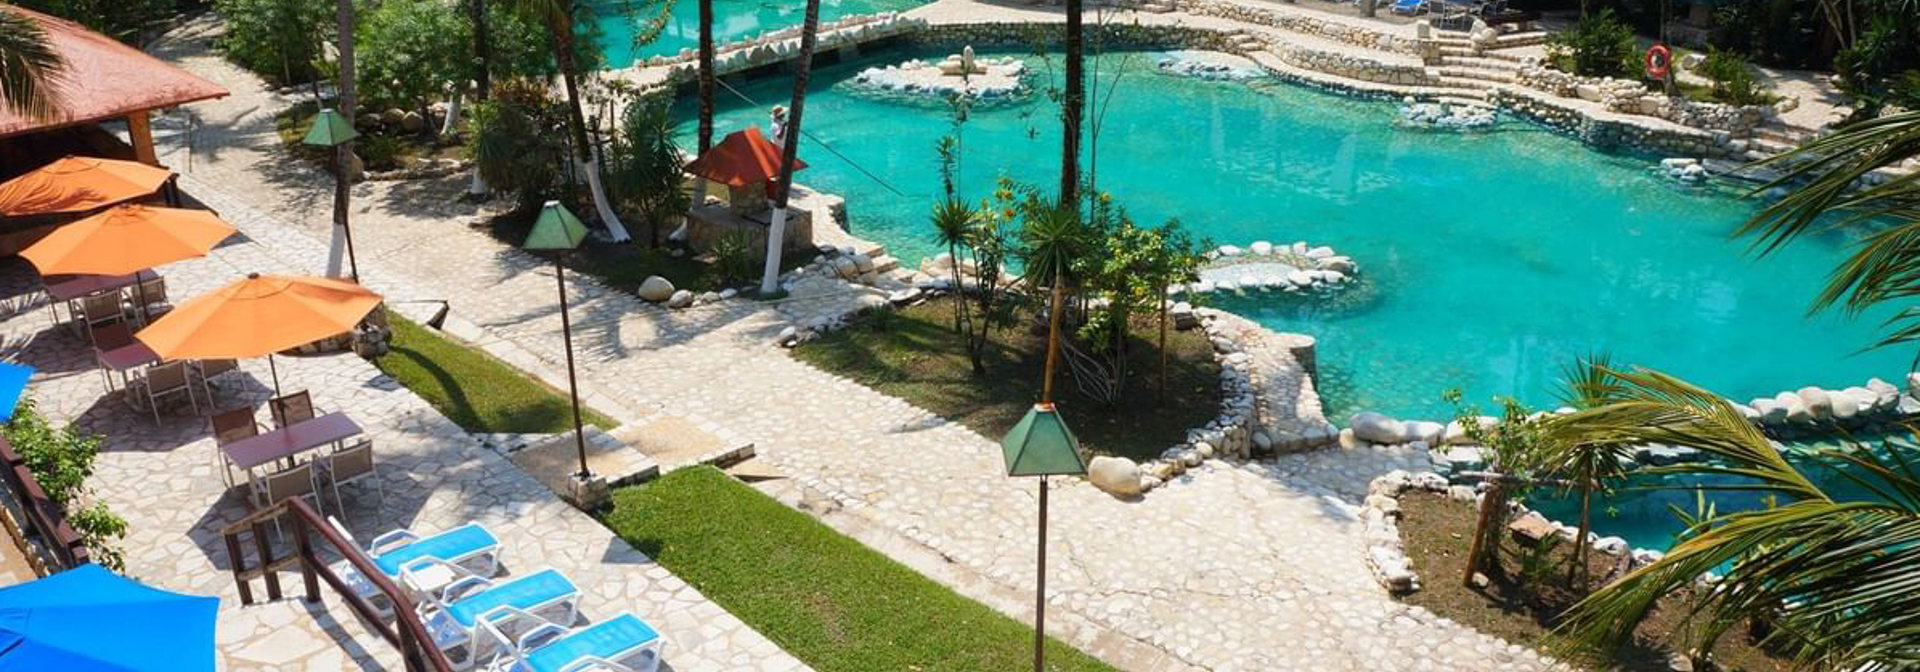 mexico - palenque - Chan Kah Resort Village_pool_01